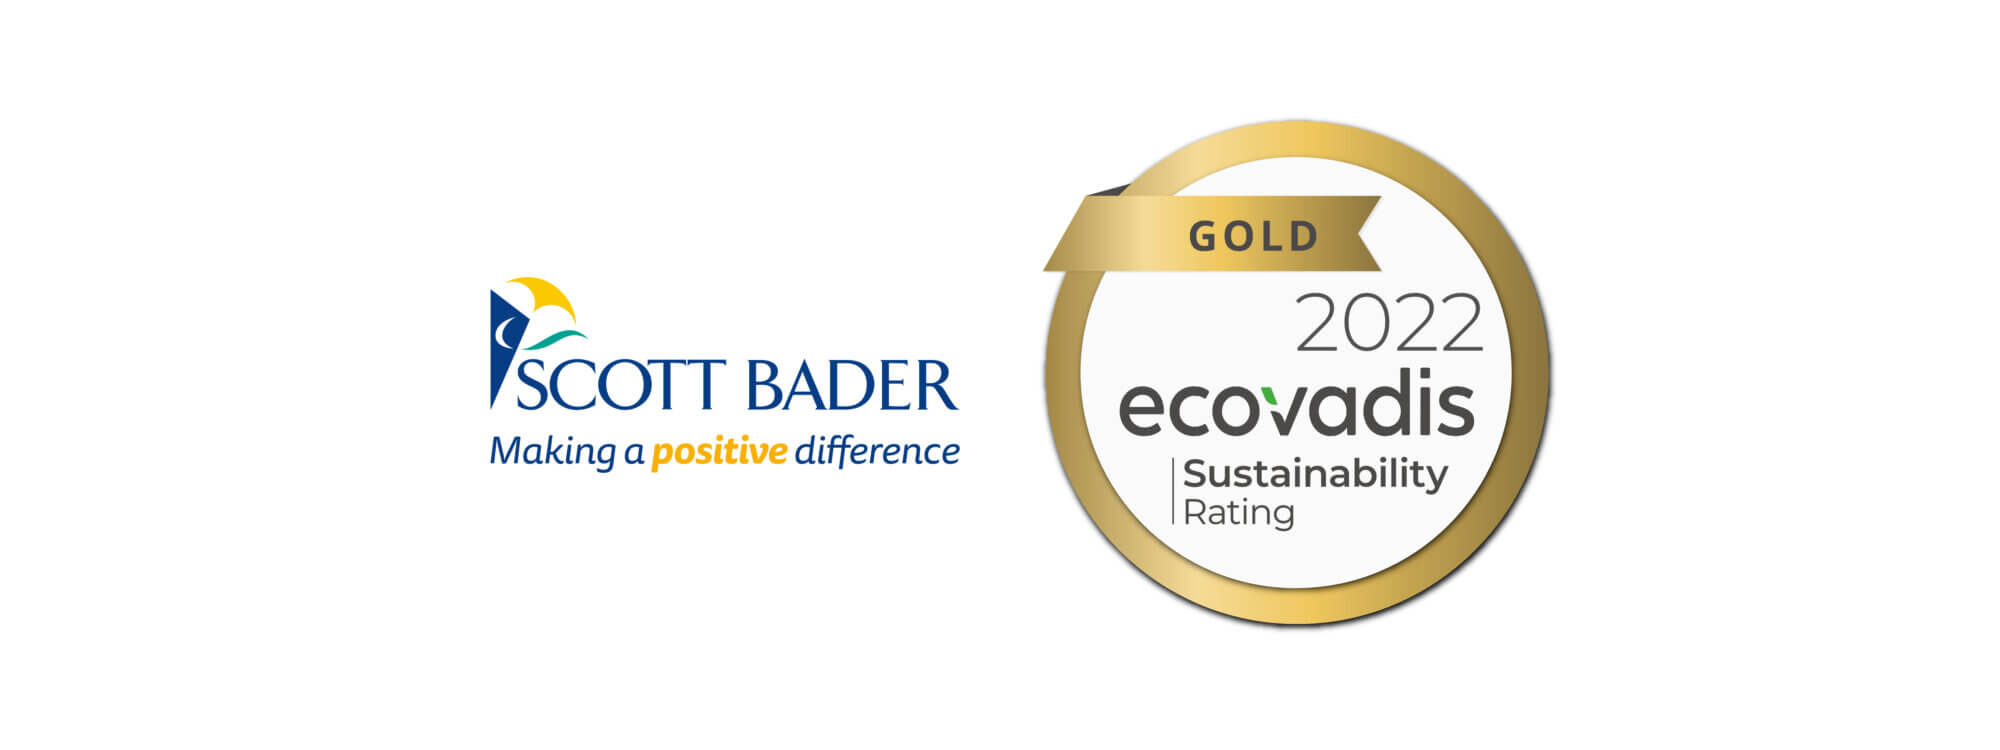 EcoVadis awards Scott Bader a Gold sustainability rating